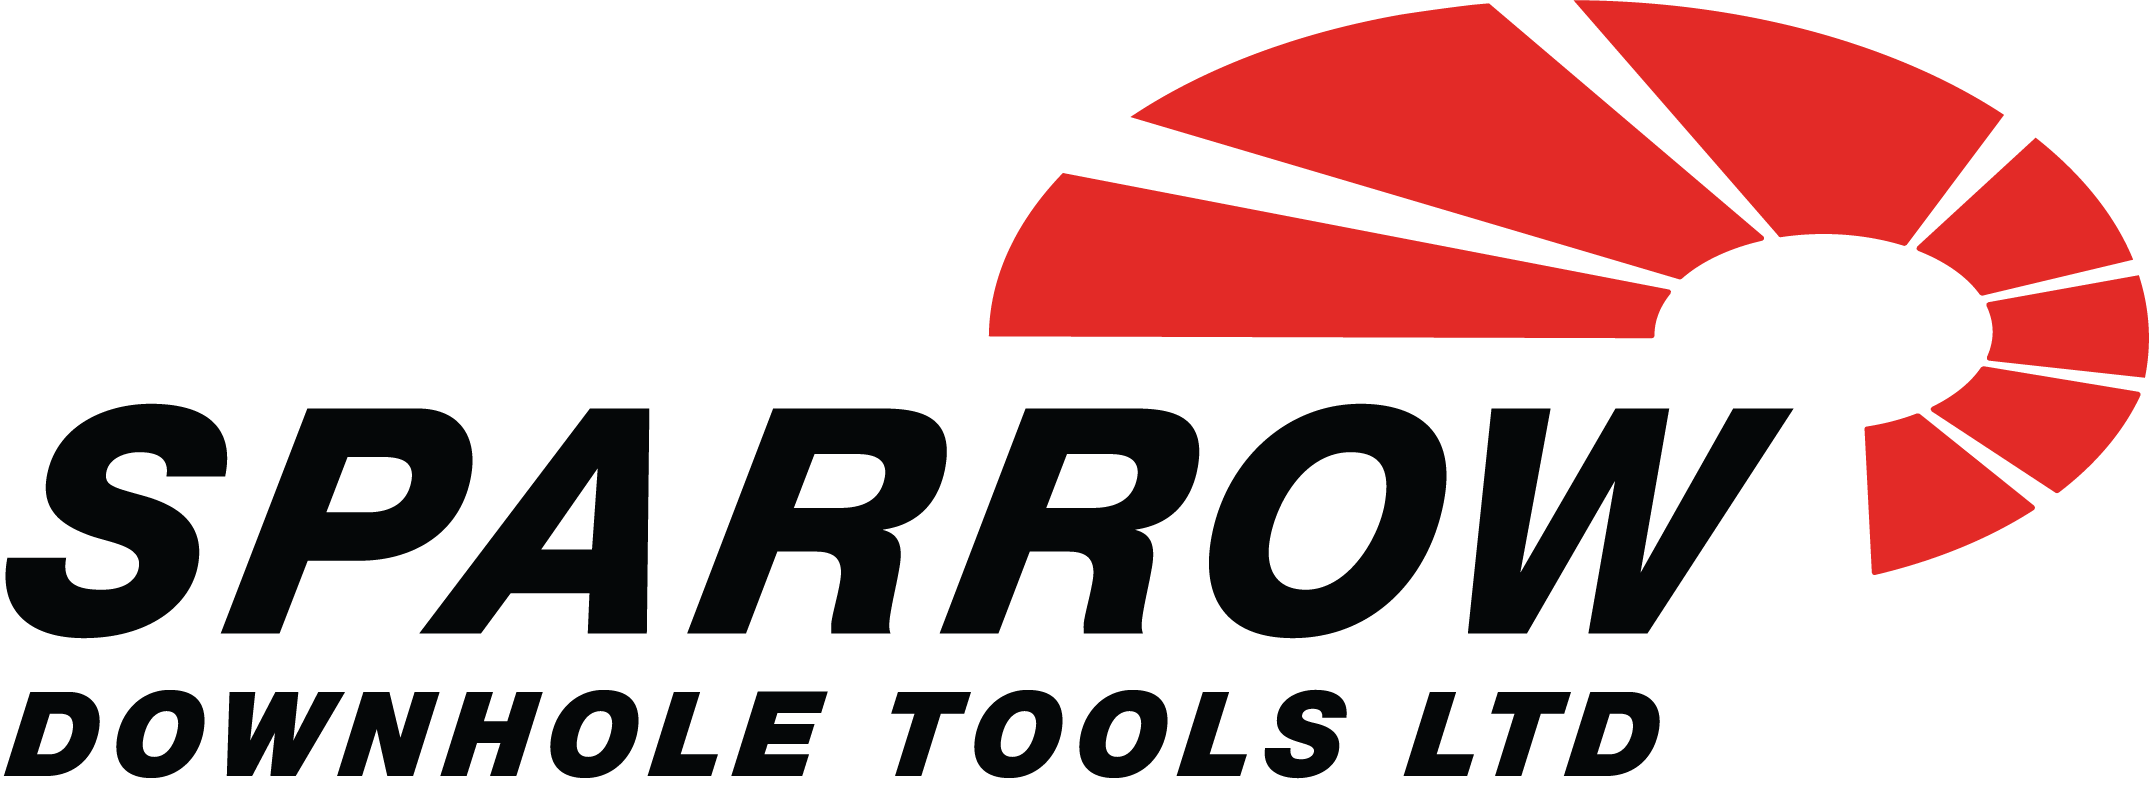 Sparrow Downhole Tools Ltd.